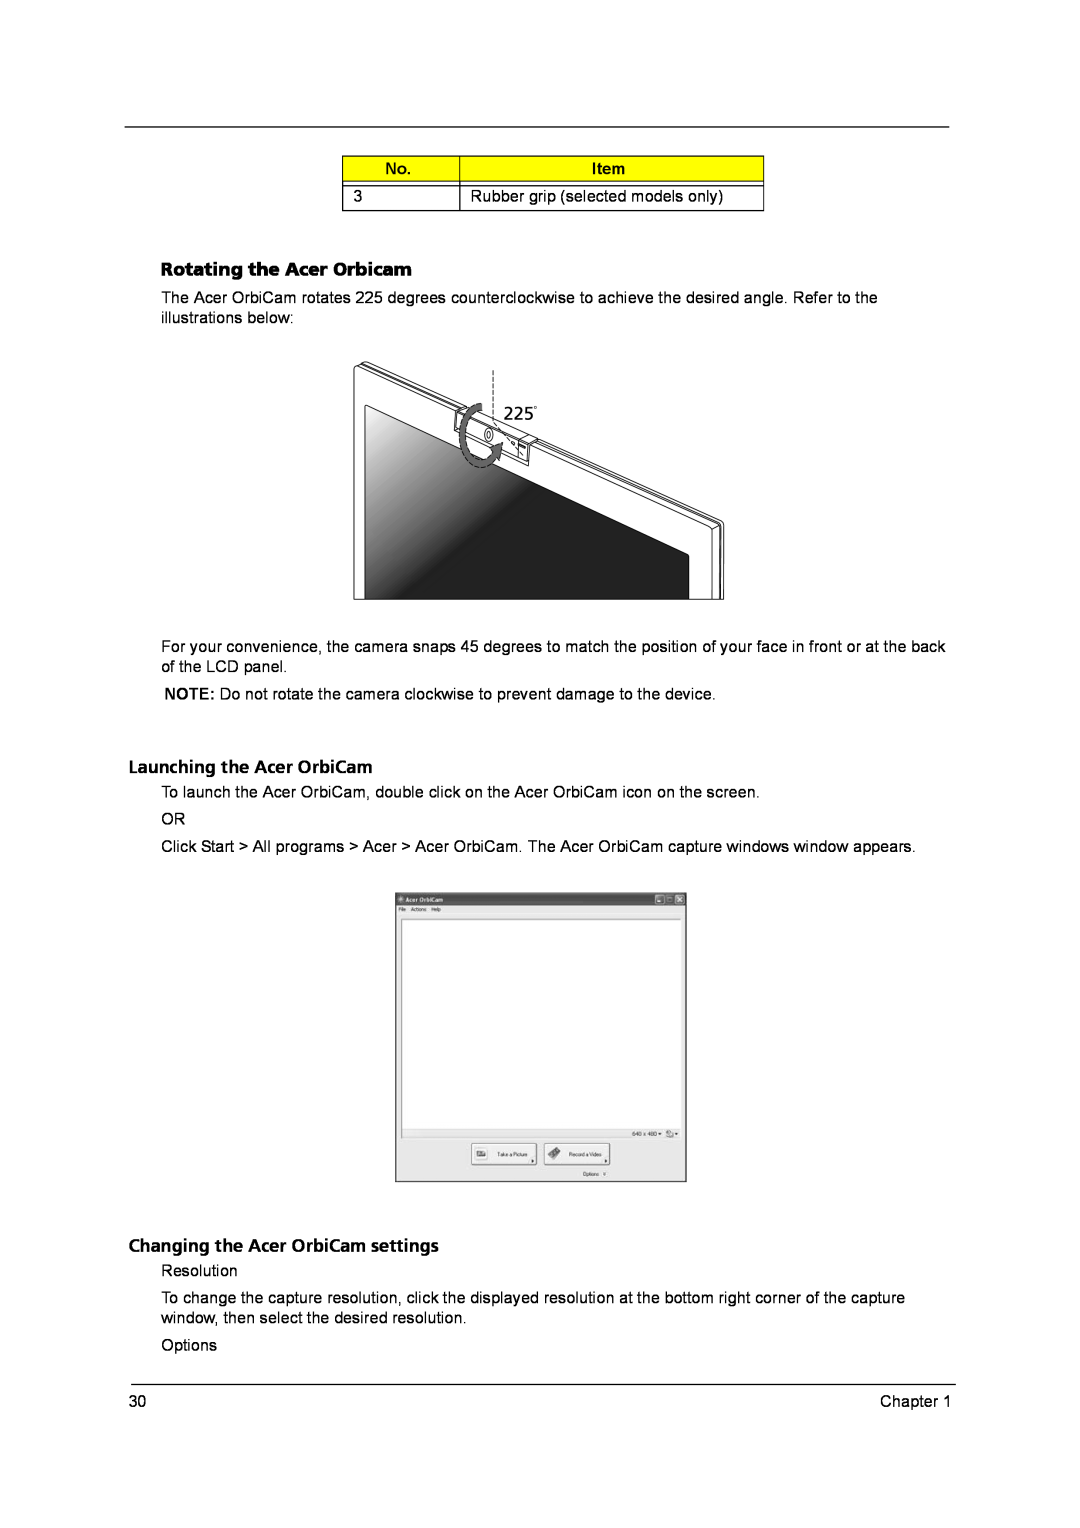 Acer 9800 manual Rotating the Acer Orbicam, Launching the Acer OrbiCam, Changing the Acer OrbiCam settings 